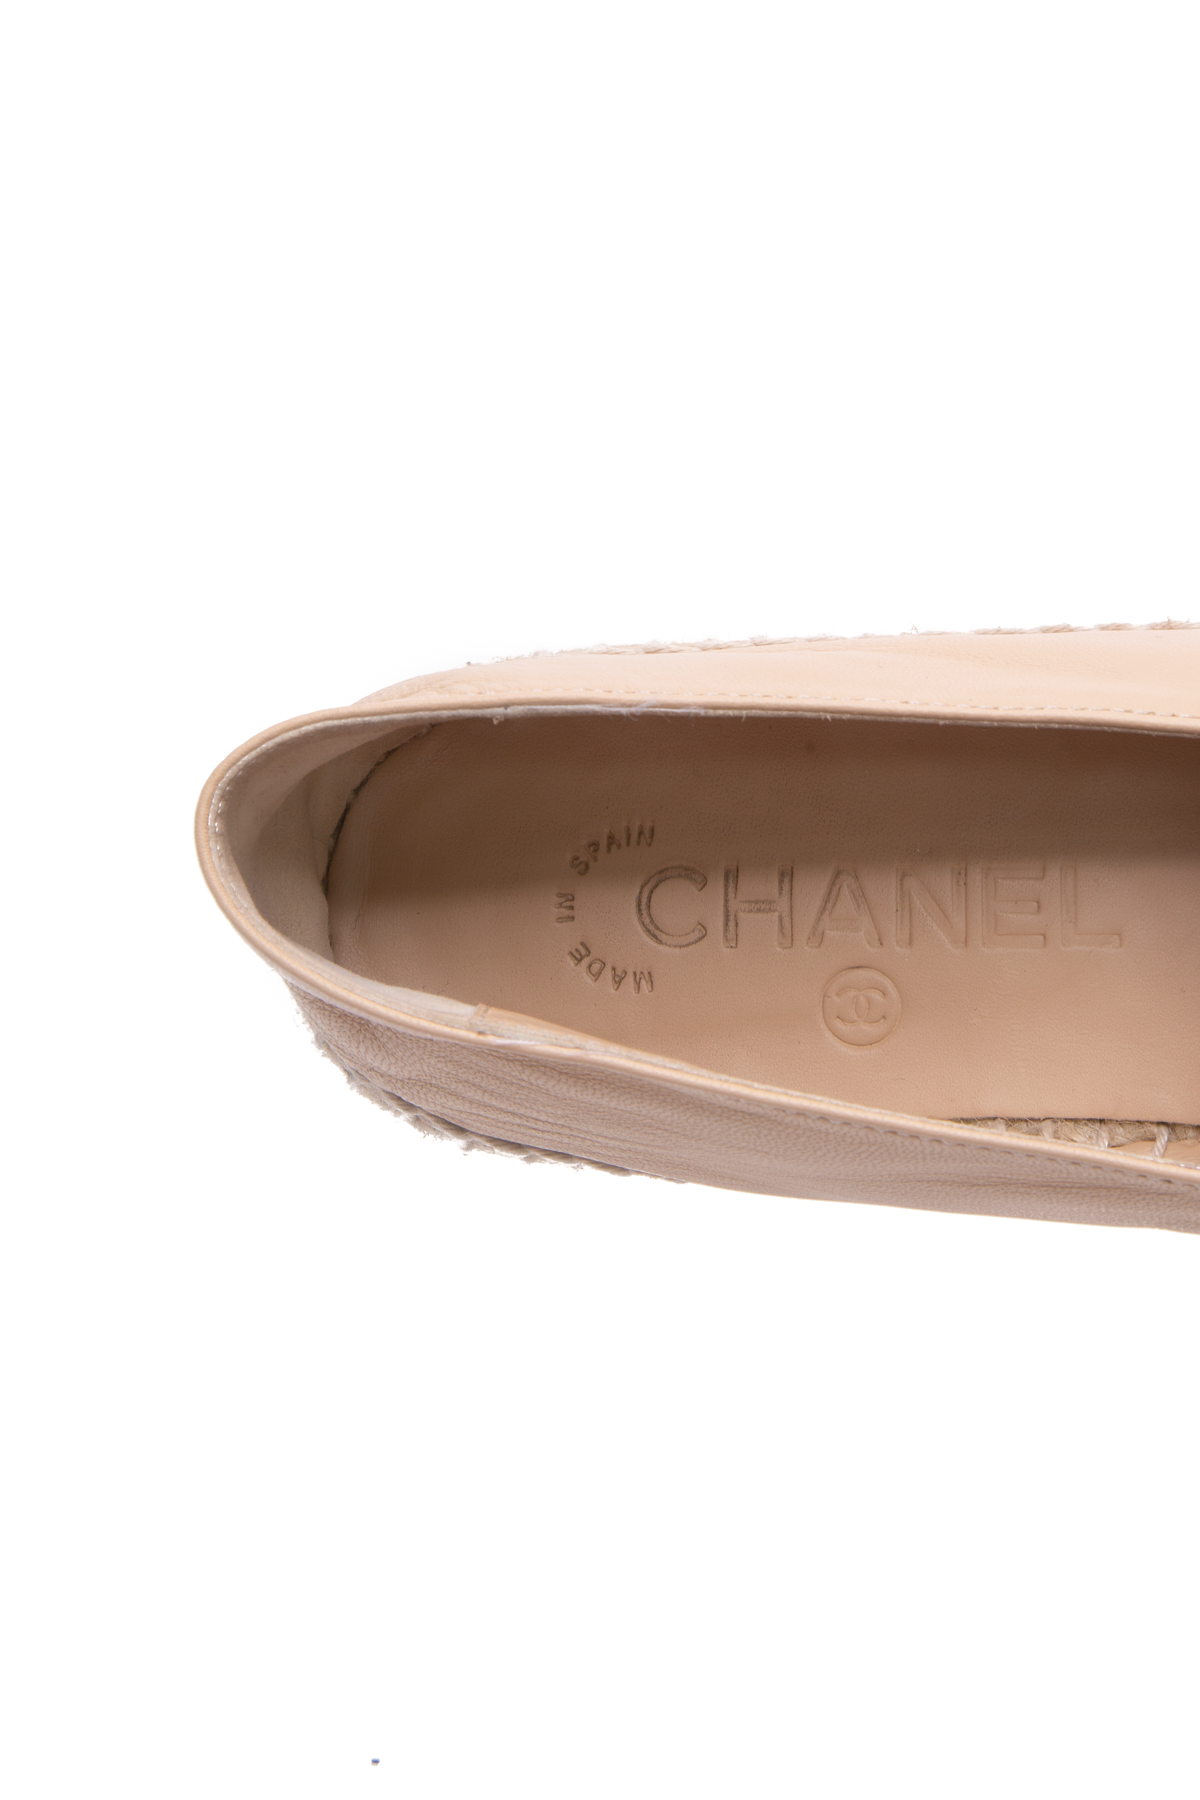 Chanel CC Espadrilles - Size 38 - Couture USA